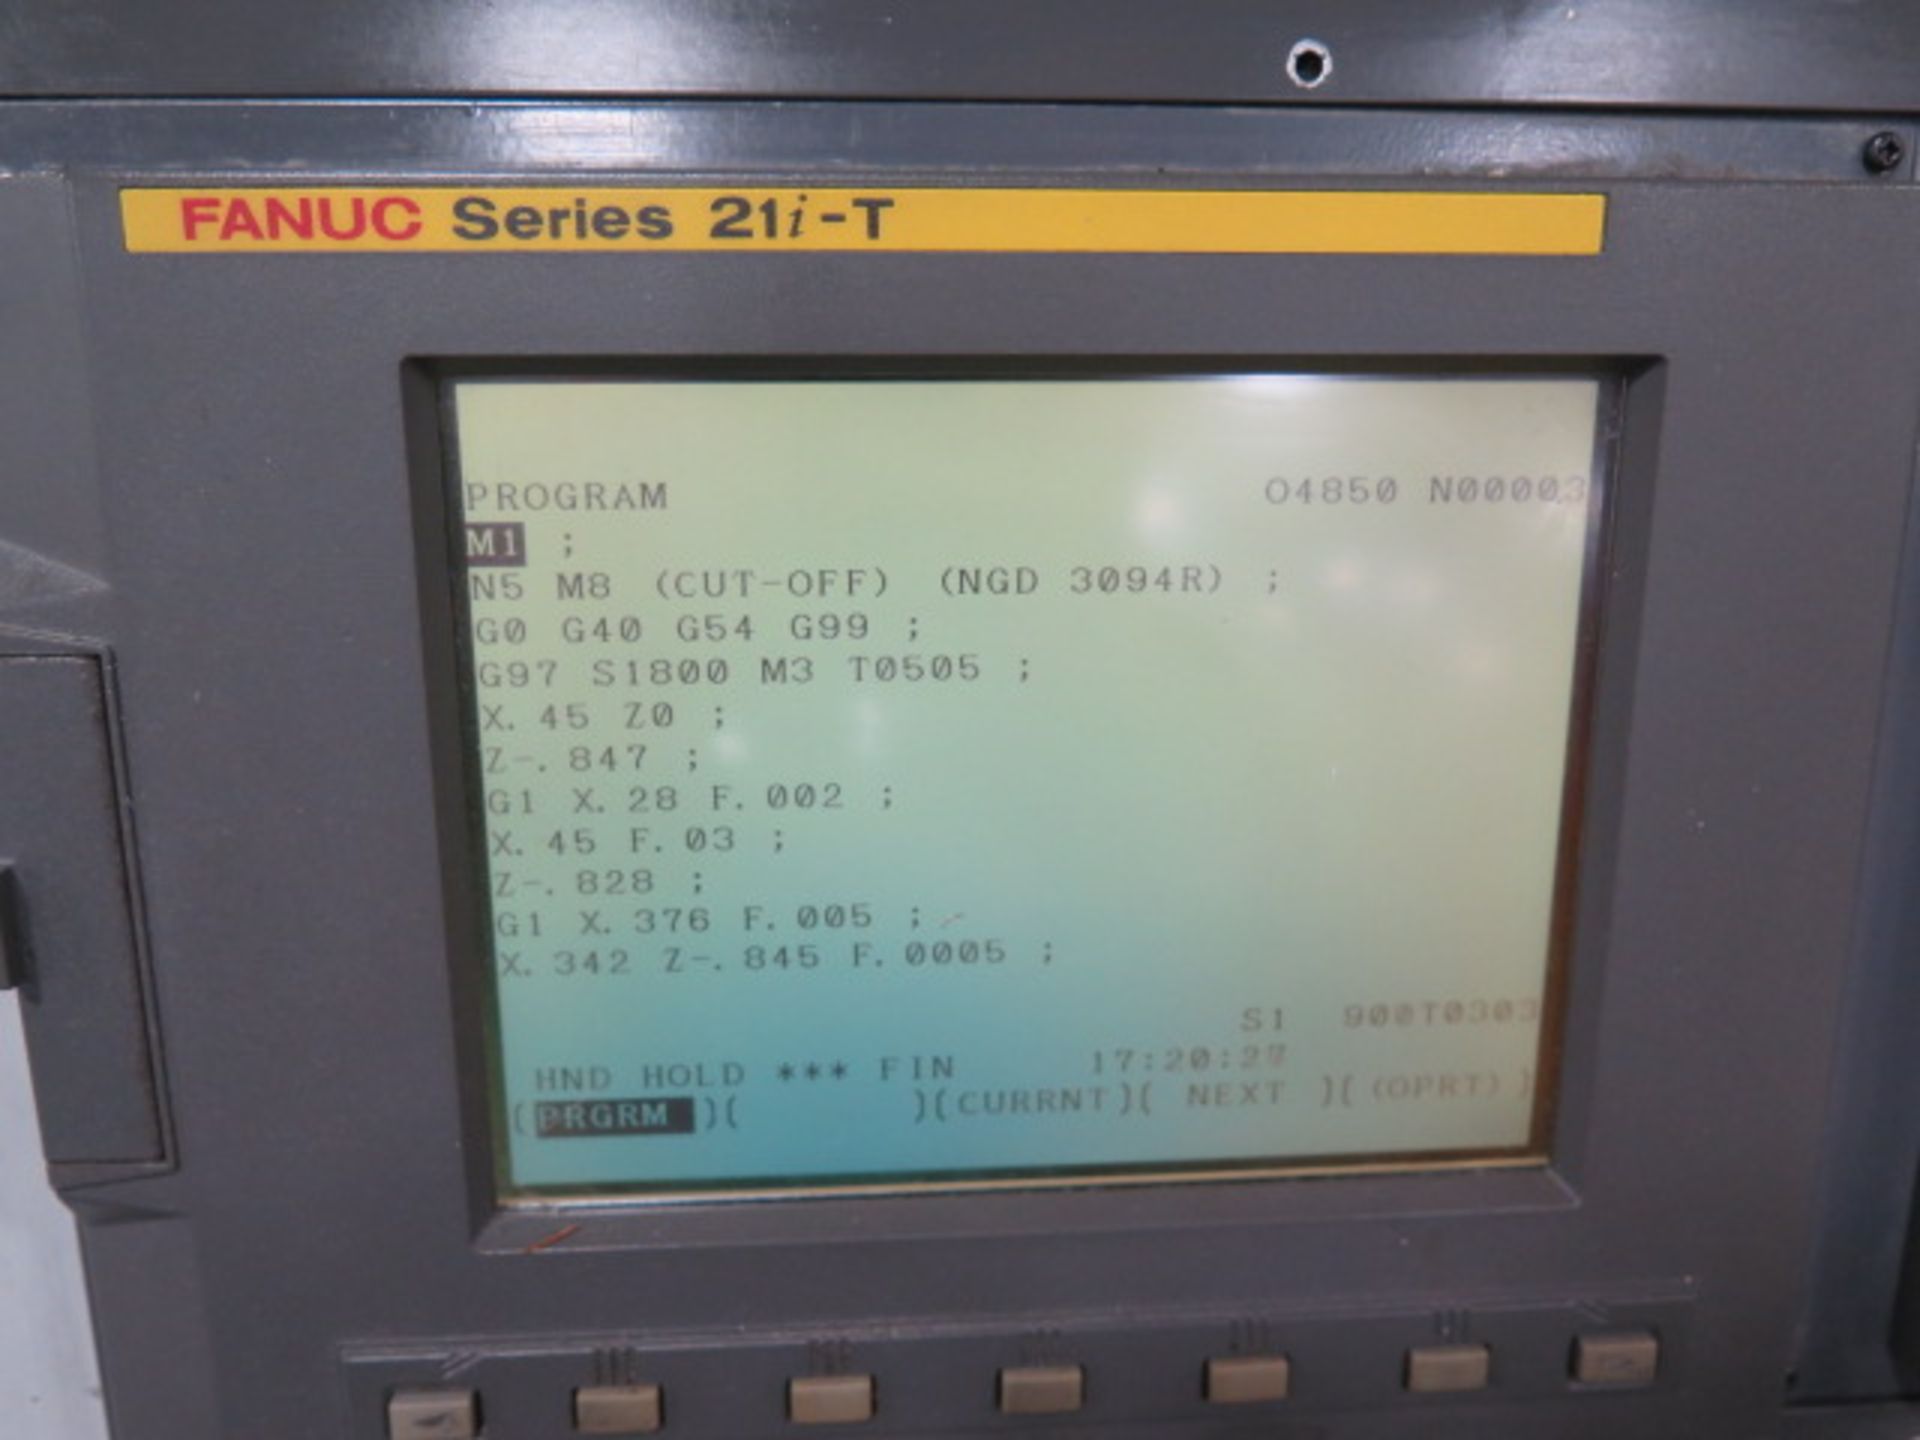 Nakamura-Tone SC-150 CNC Turning Center s/n S150808 w/ Fanuc Series 21i-T Controls, 12-Station Turre - Image 6 of 14